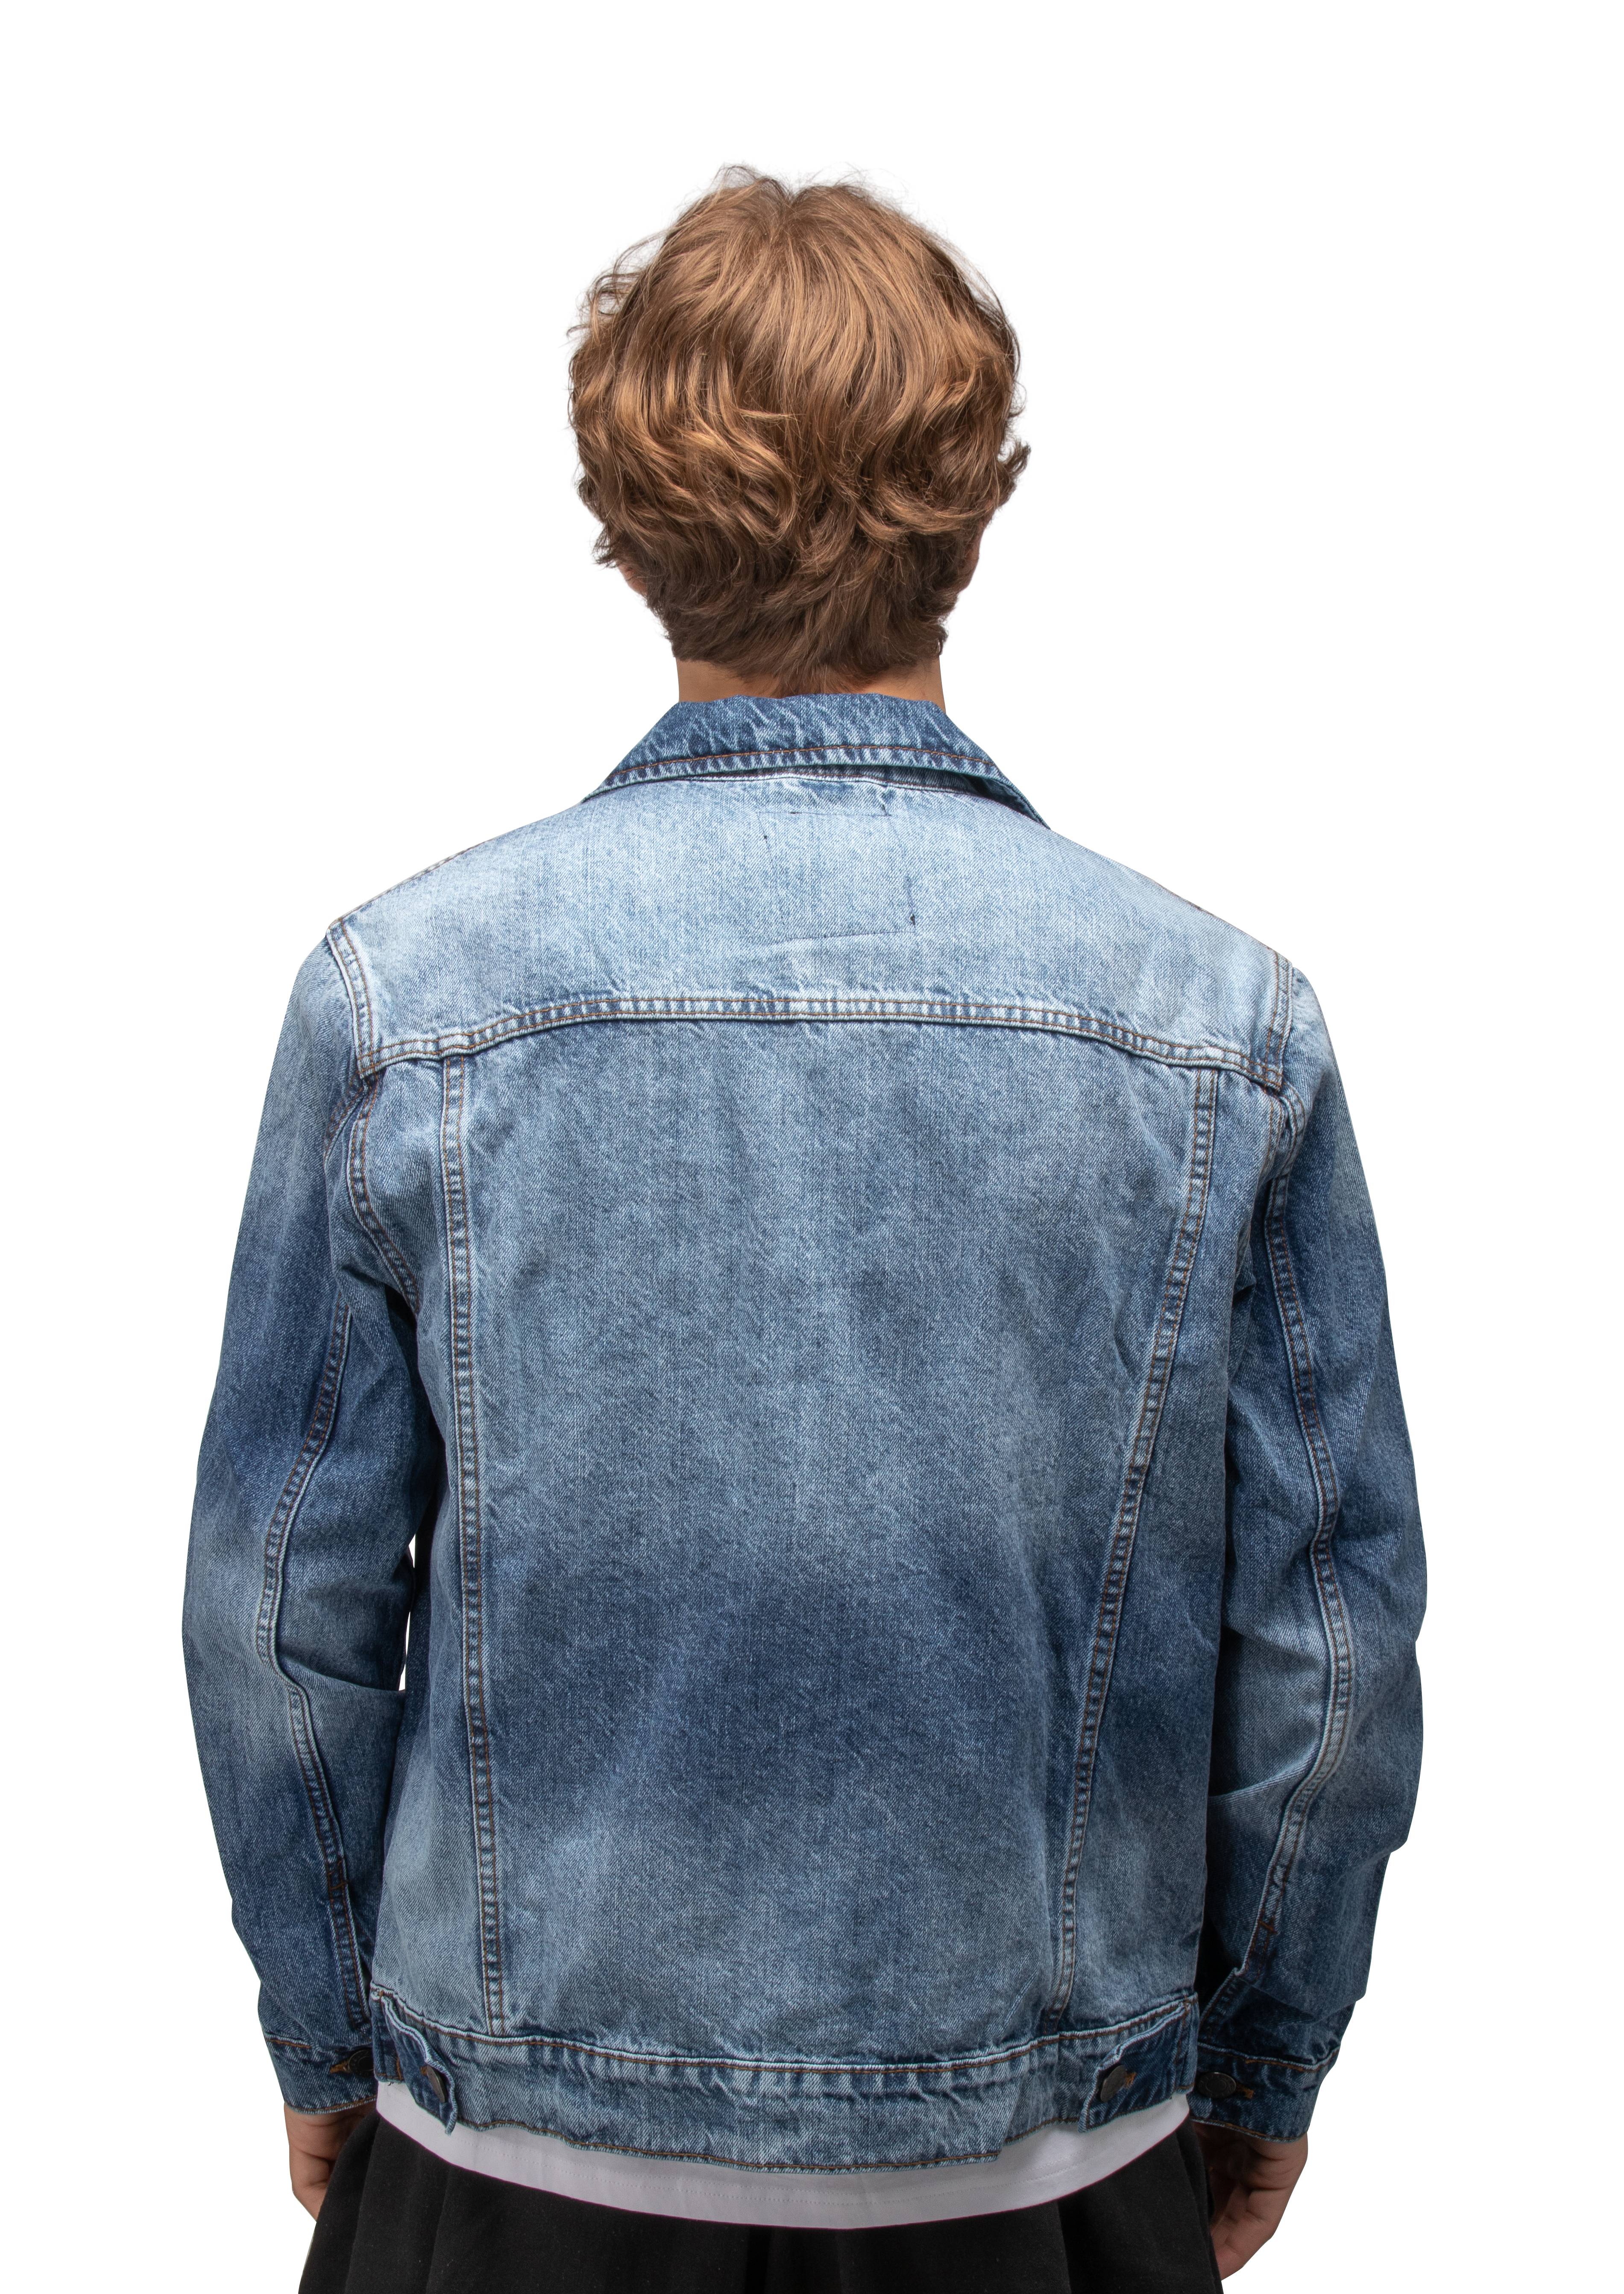 X RAY Men's Denim Jacket, Washed Ripped Distressed Flex Stretch Casual Trucker Biker Jean Jacket, Medium Blue, Large - image 2 of 9